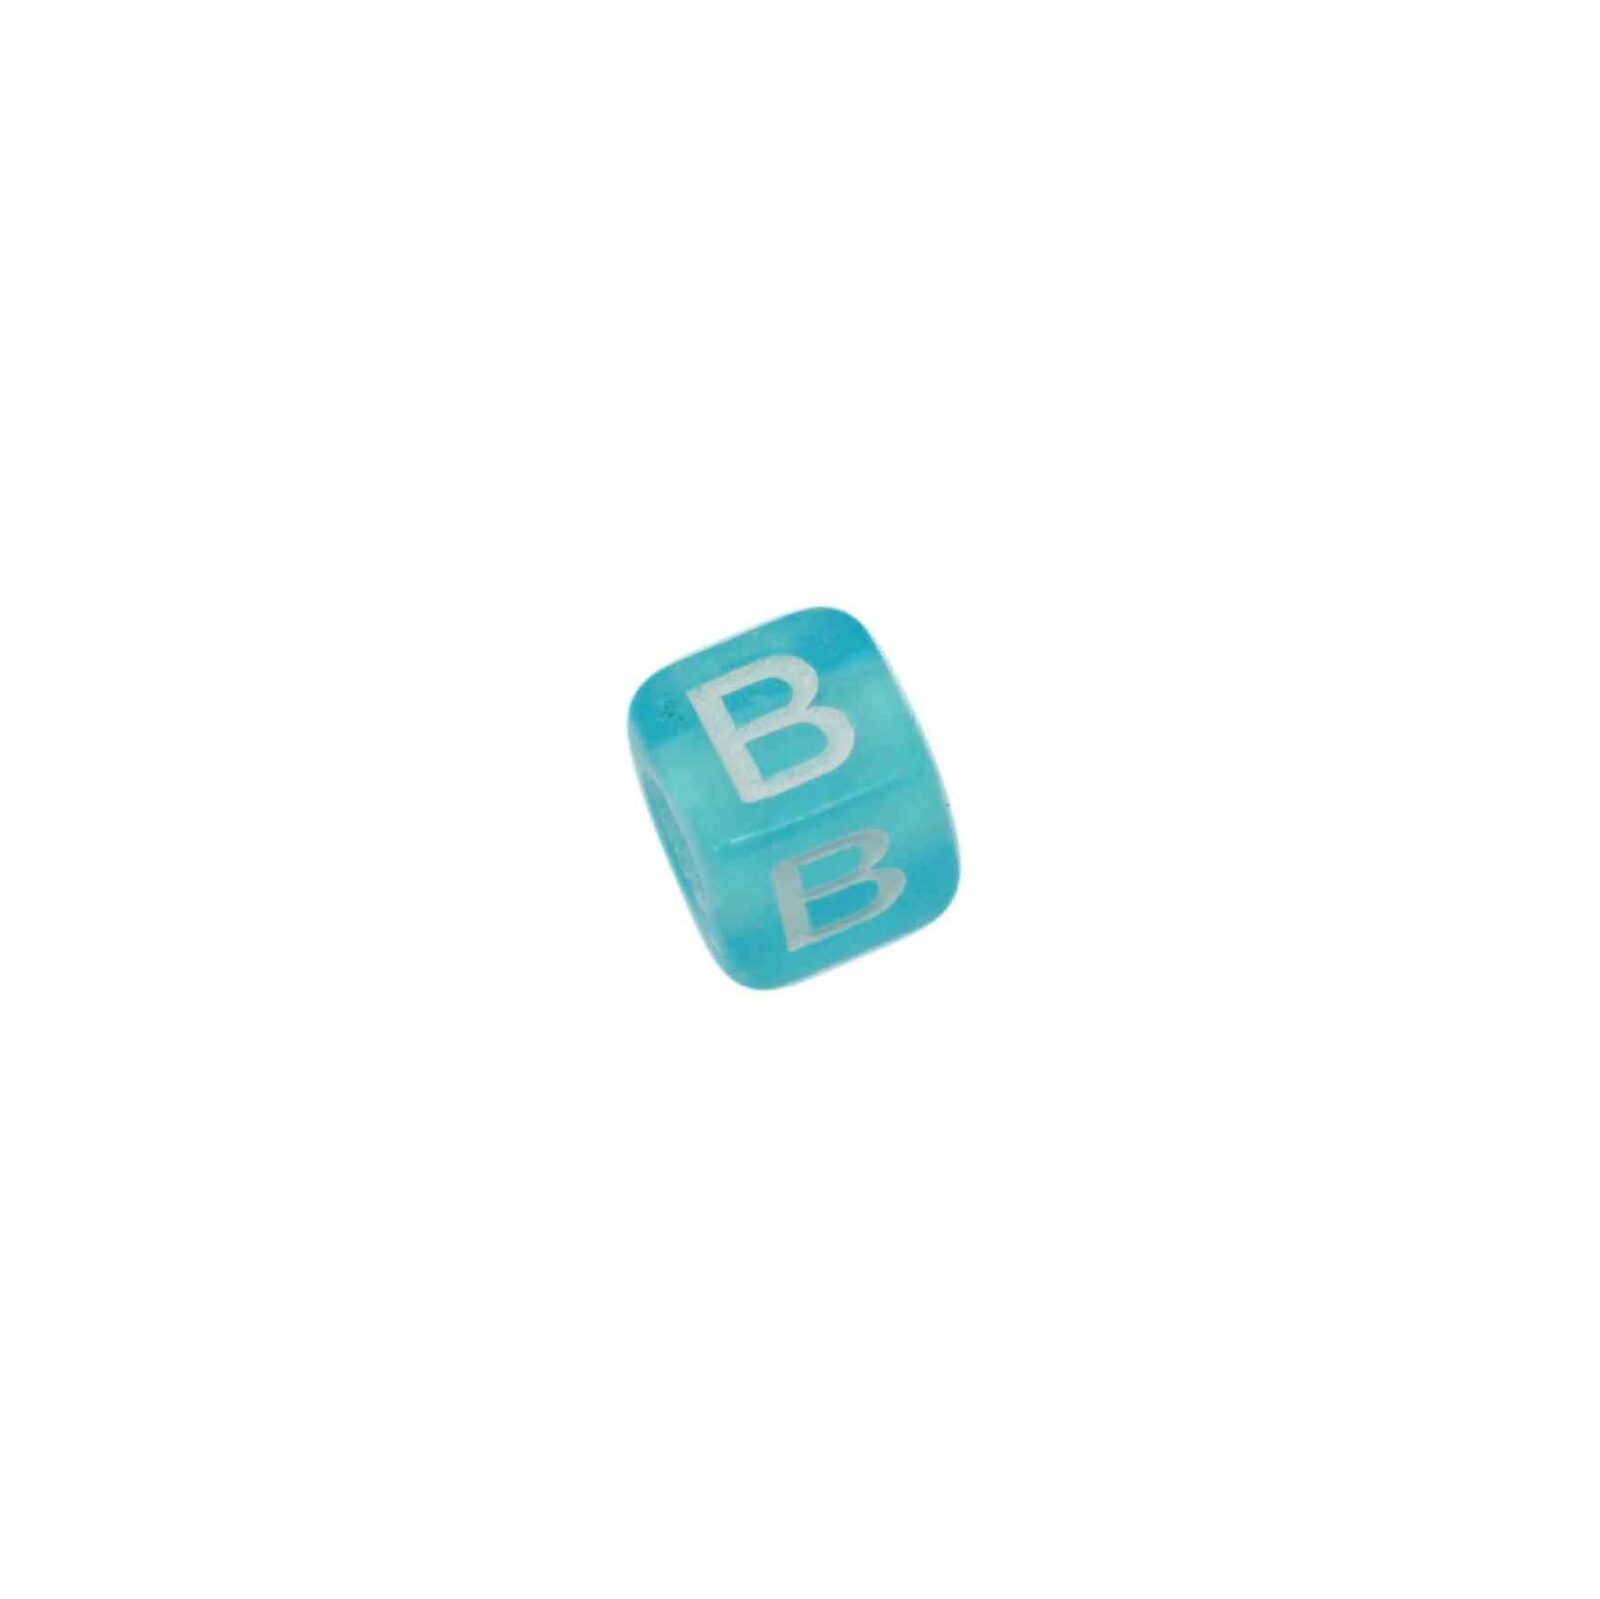 Blauwe letterkraal B